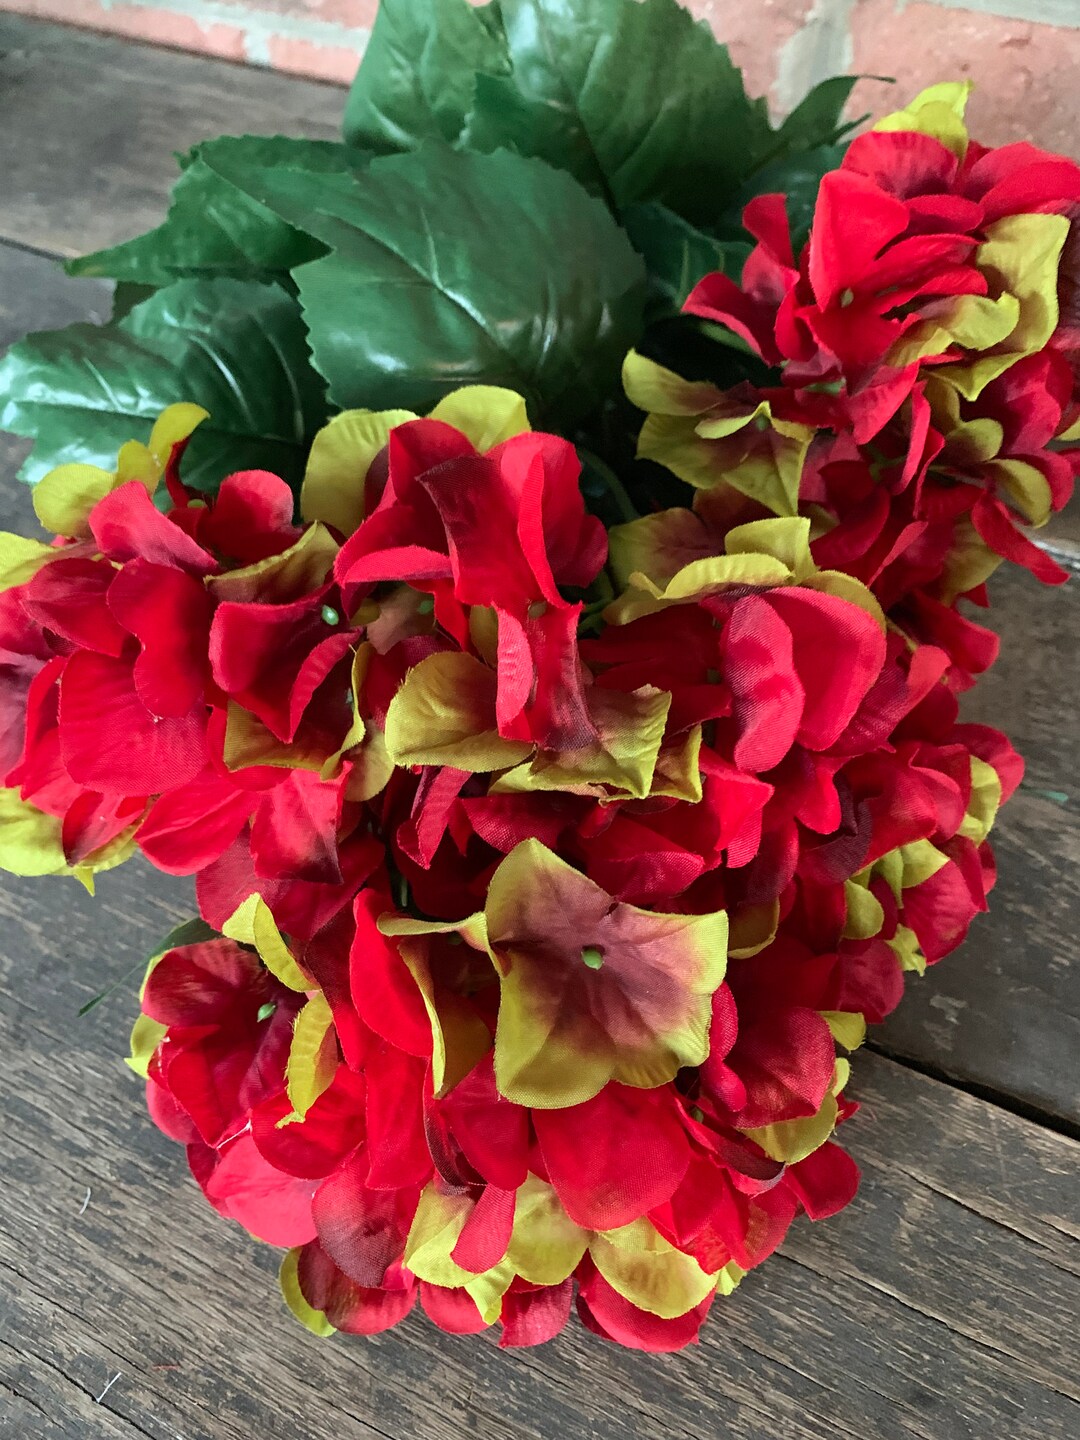 39 Gm. Floral Adhesive 2 Pack Oasis Florist Supplies Tools Glue Set of 2 